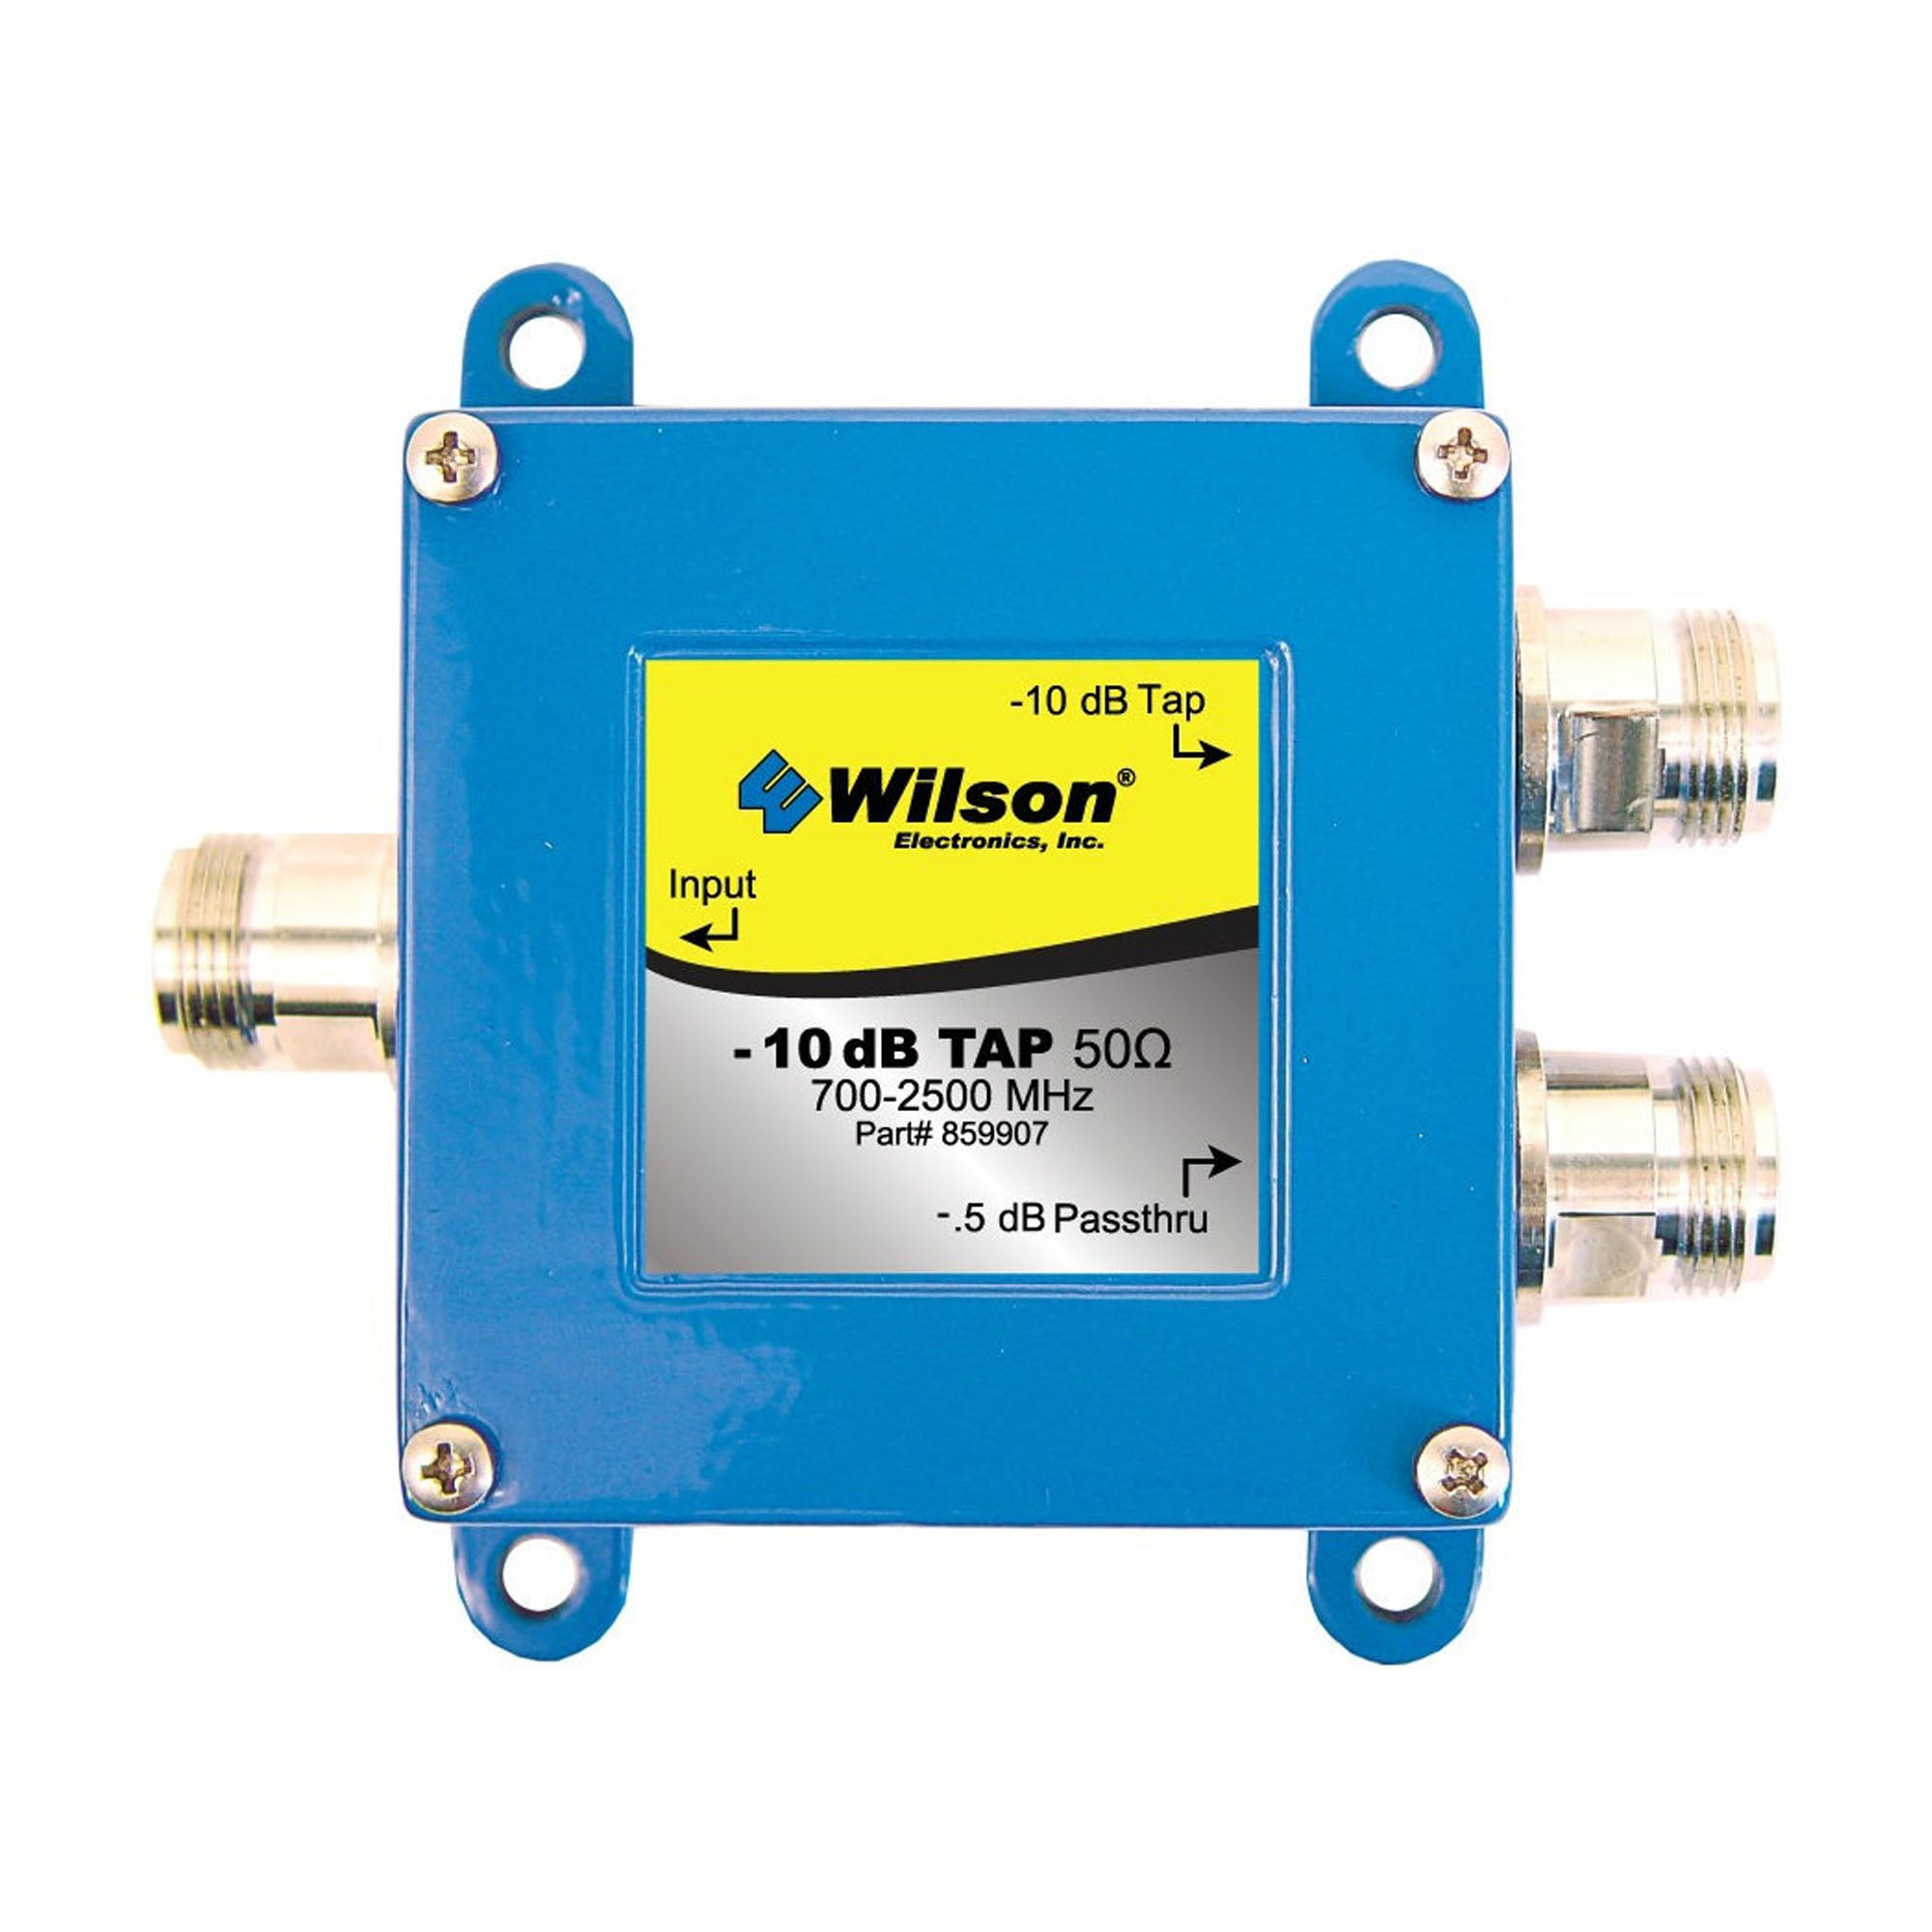 Wilson 10 dB tap w/0.5 dB pass through w/N female connectors - 690WI859907